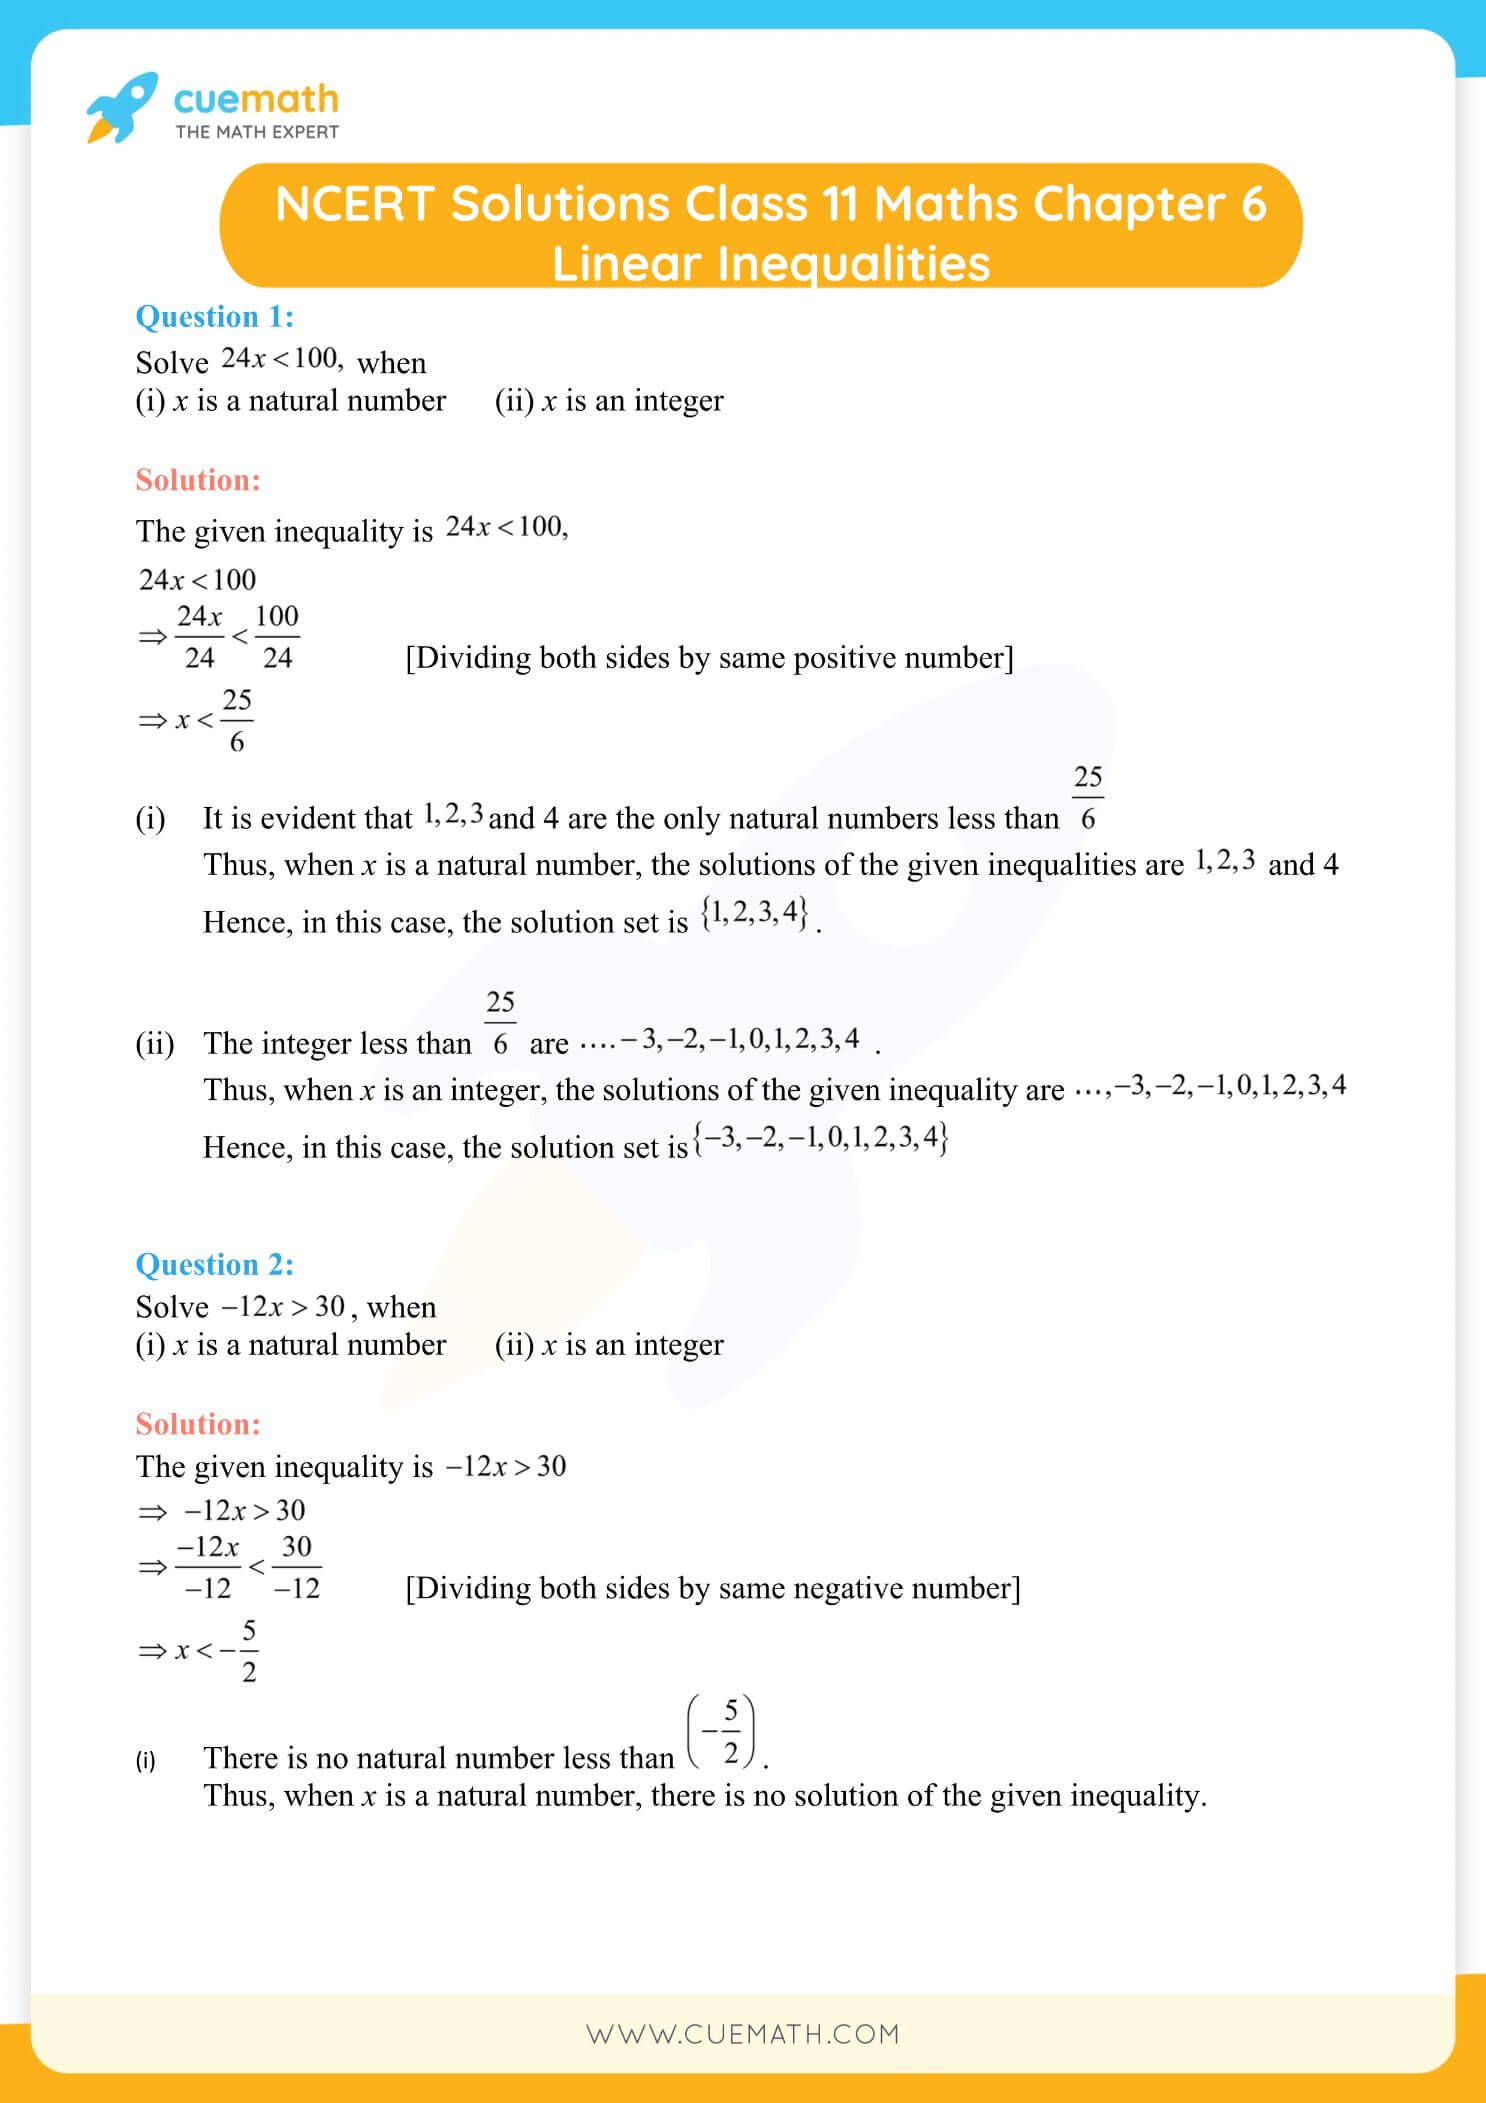 NCERT Solutions Class 11 Maths Chapter 6 Exercise 6.1 1